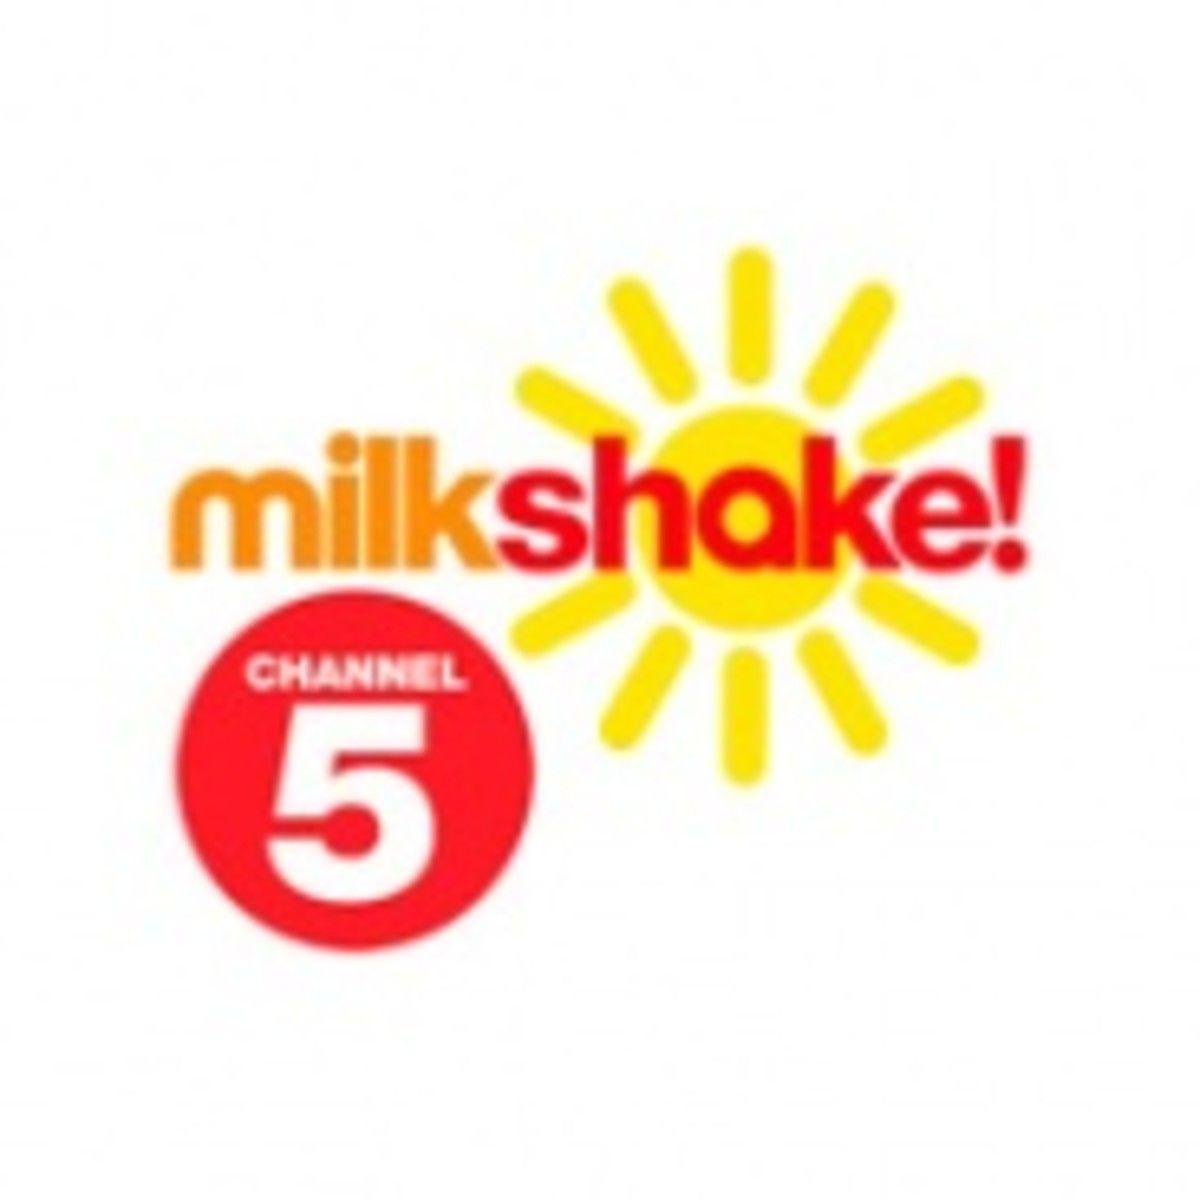 Boost Sports Logo - Summer sports' week on Milkshake to boost brands - Licensing.biz